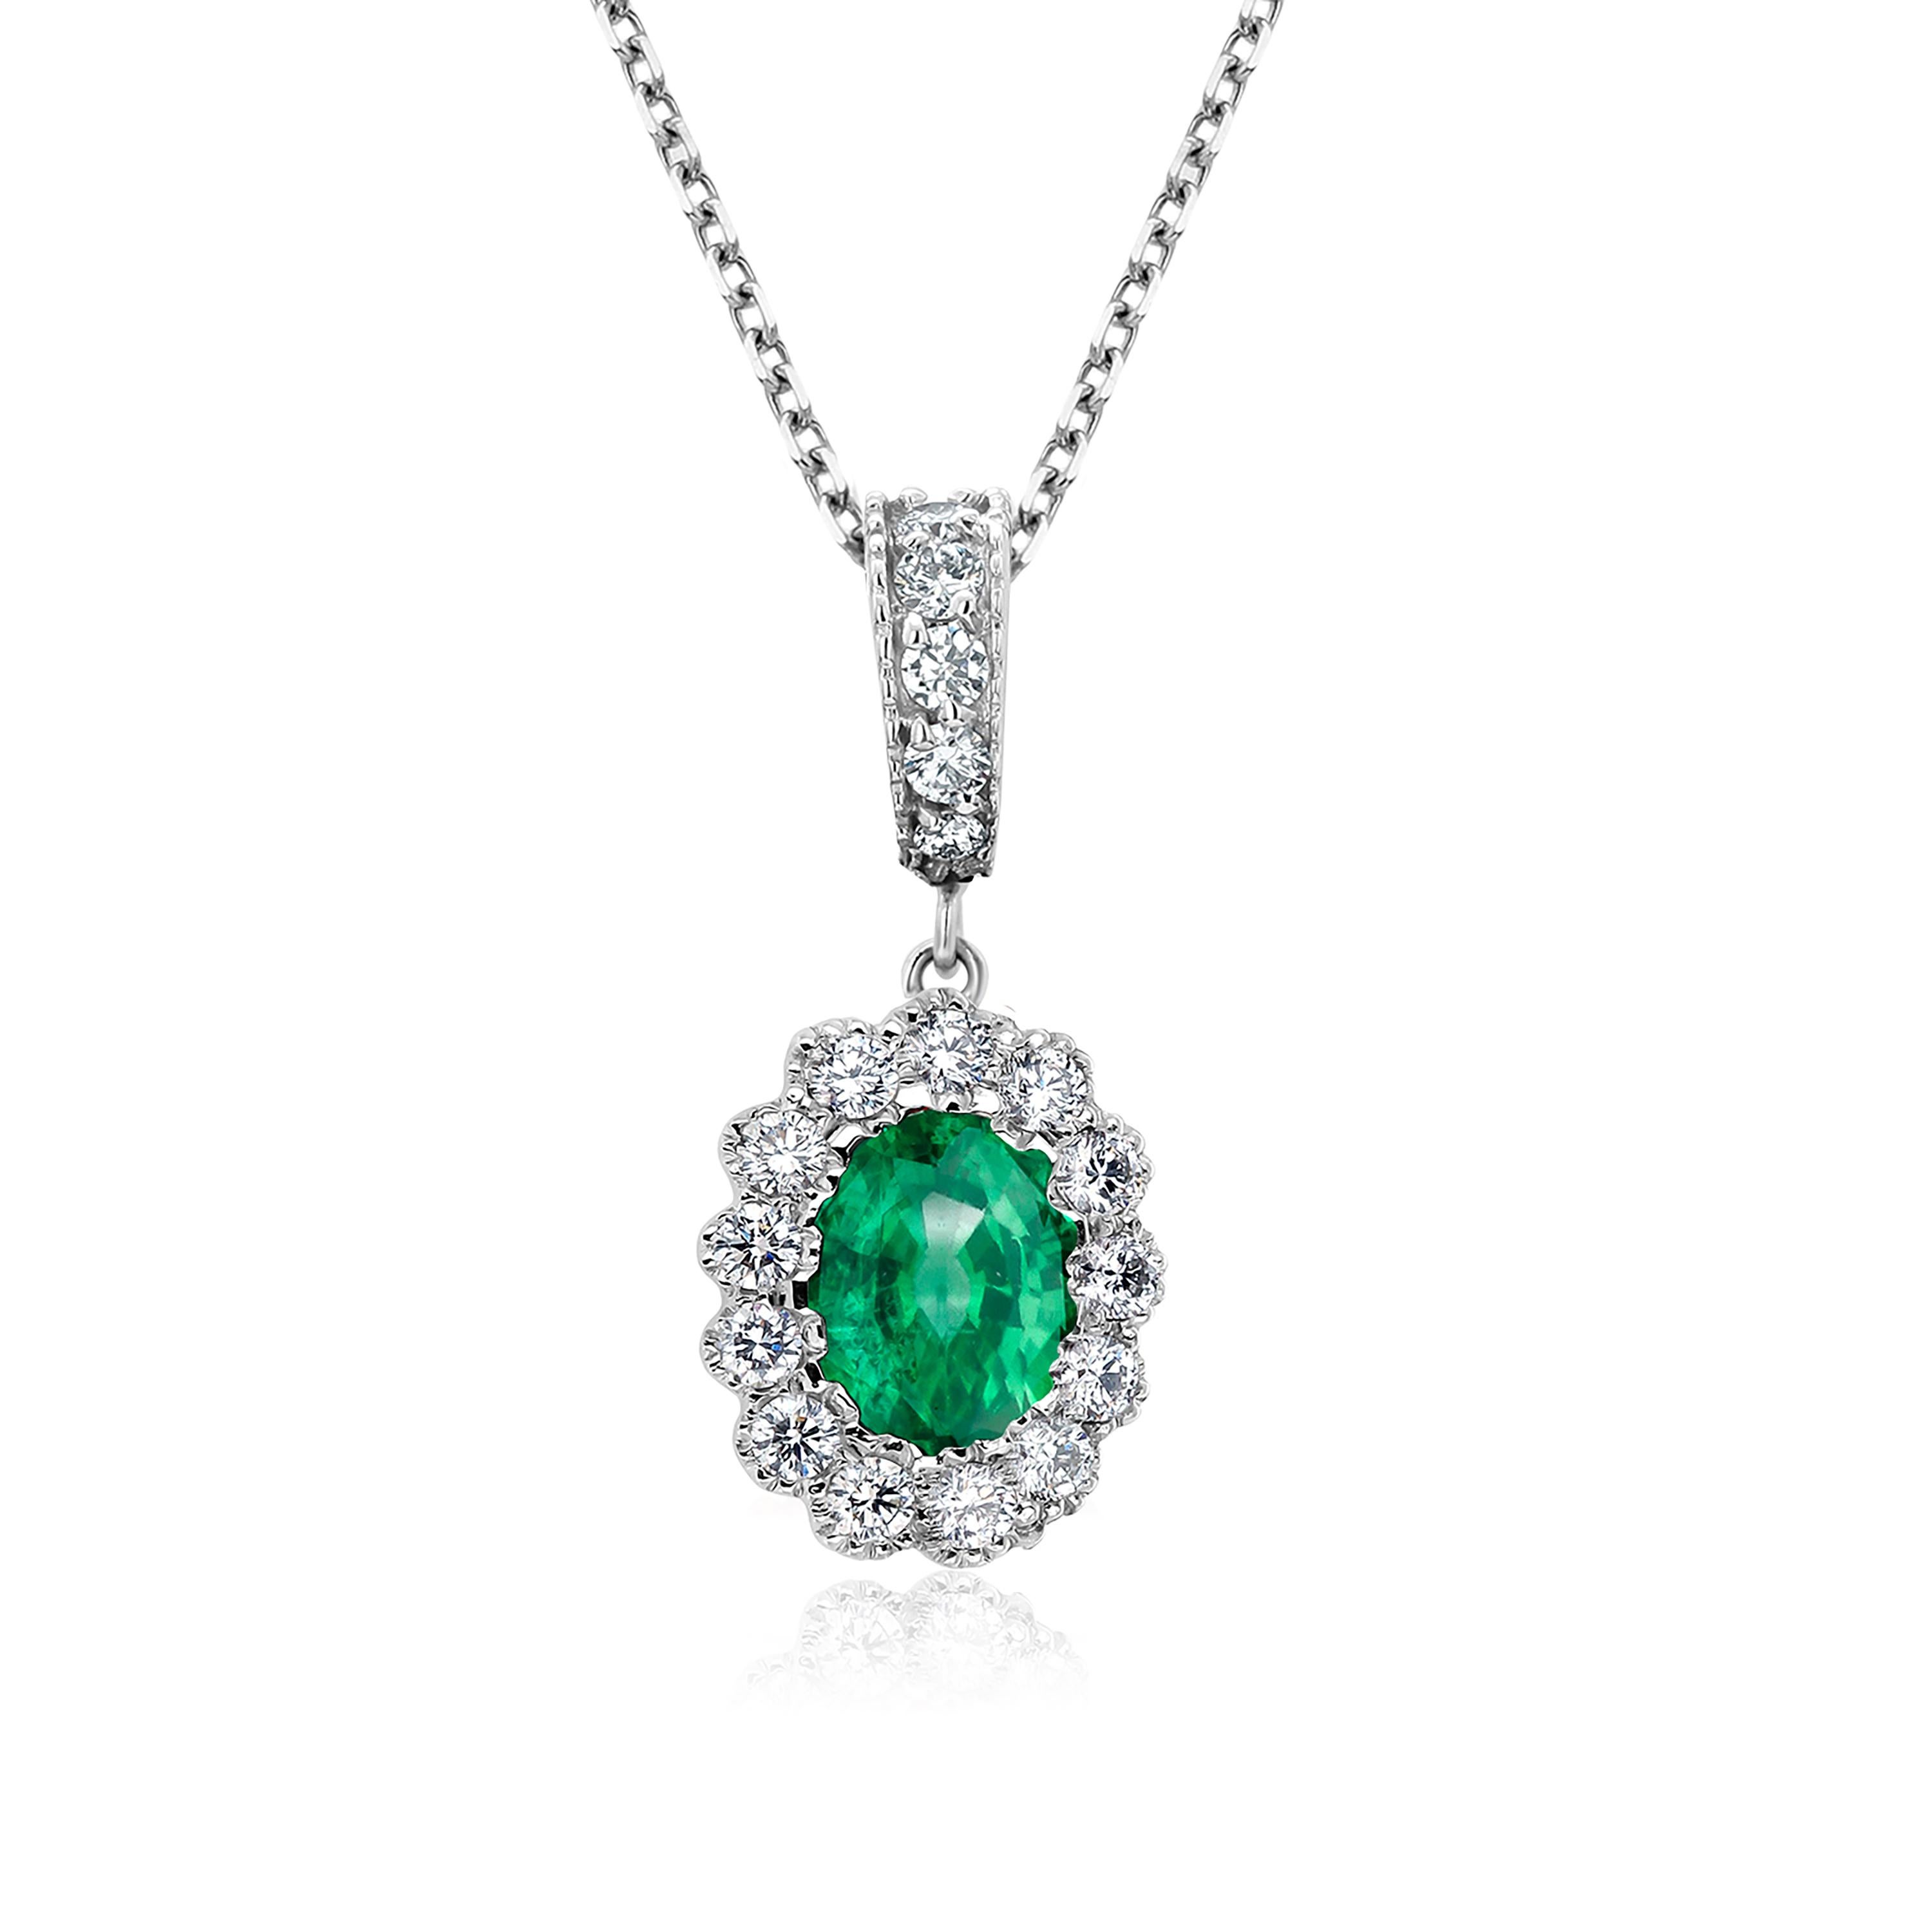 Contemporary Oval Emerald Halo Diamond Gold Pendant with Diamond Bail Layered Necklace 